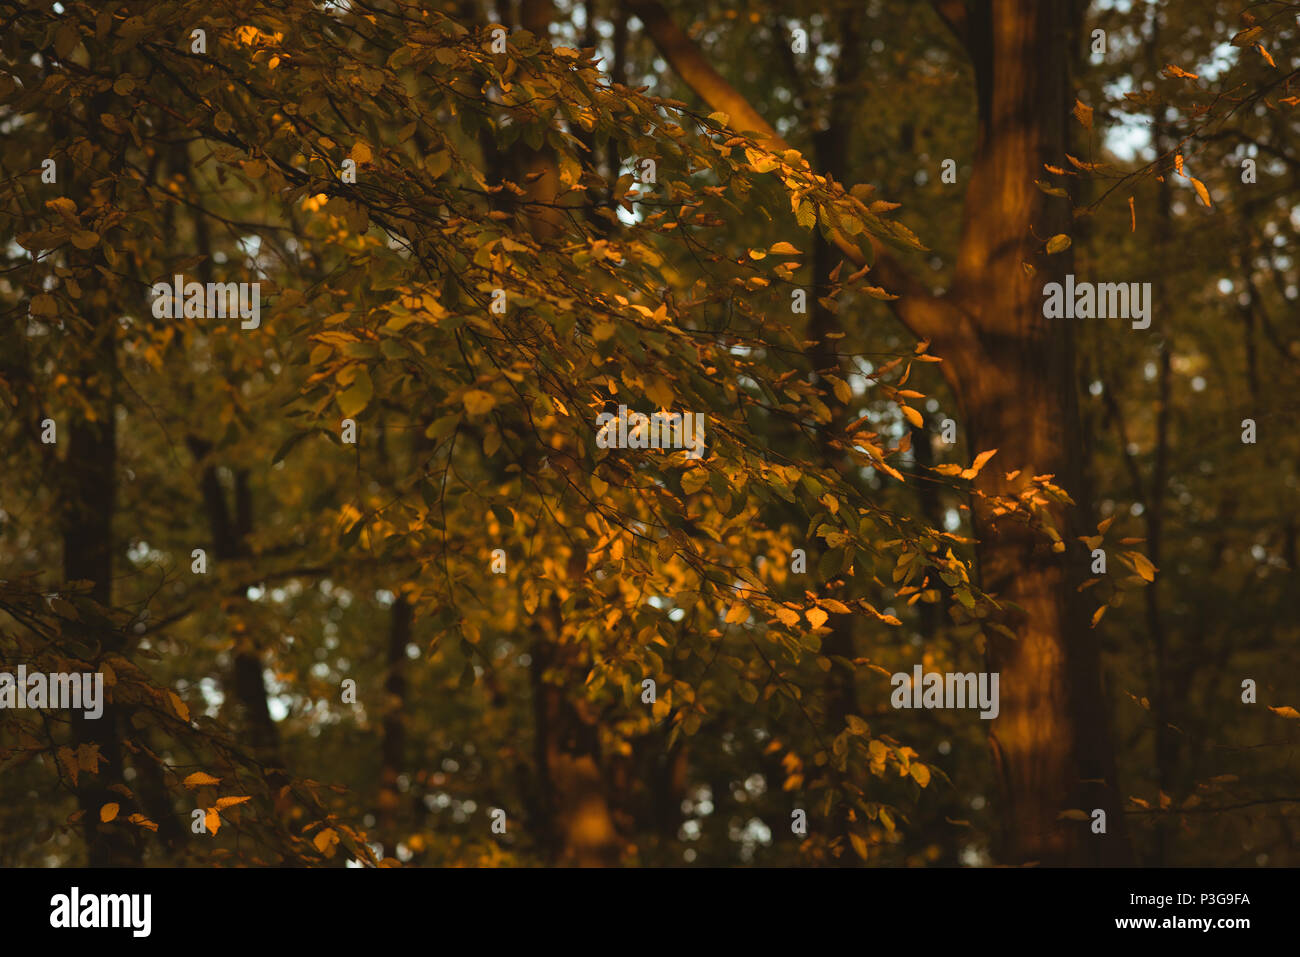 Yellowish orange autumn leaves on branch of tree Stock Photo